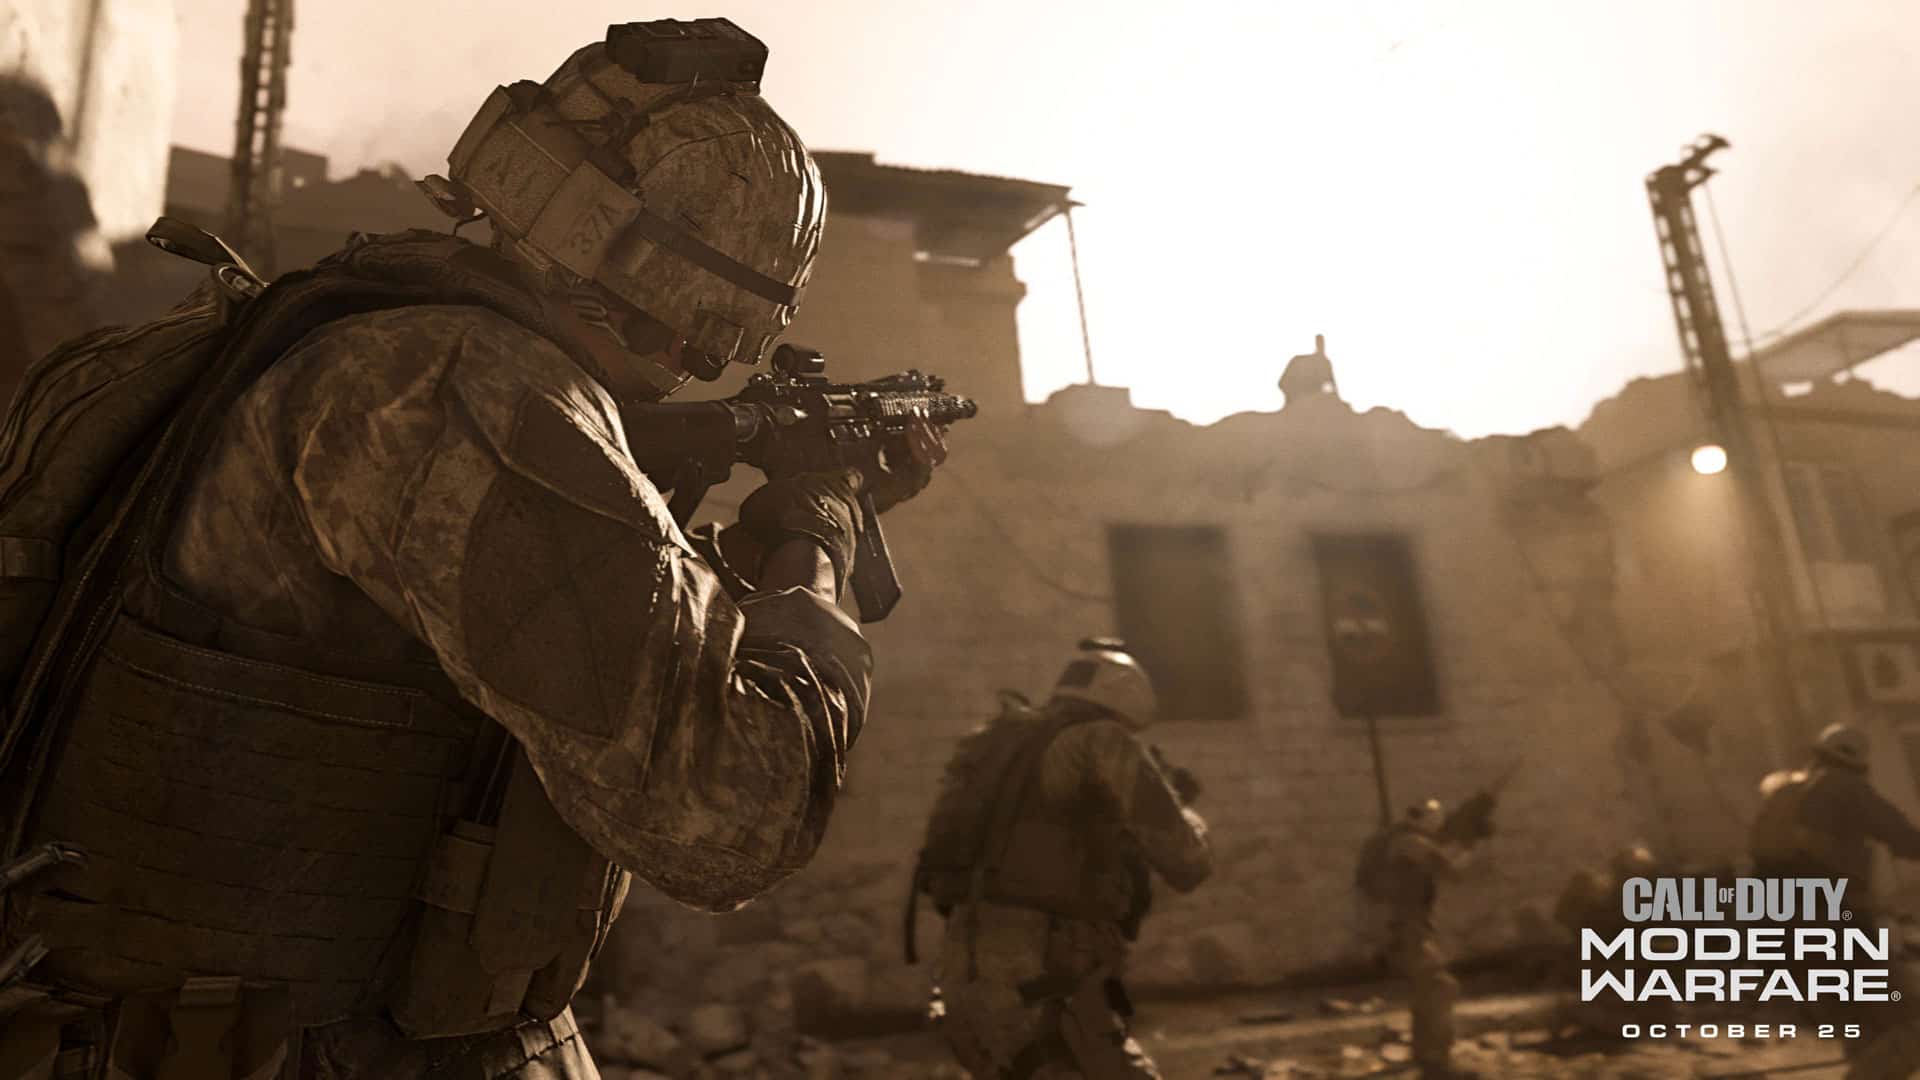 Call of Duty: Modern Warfare update 1.09